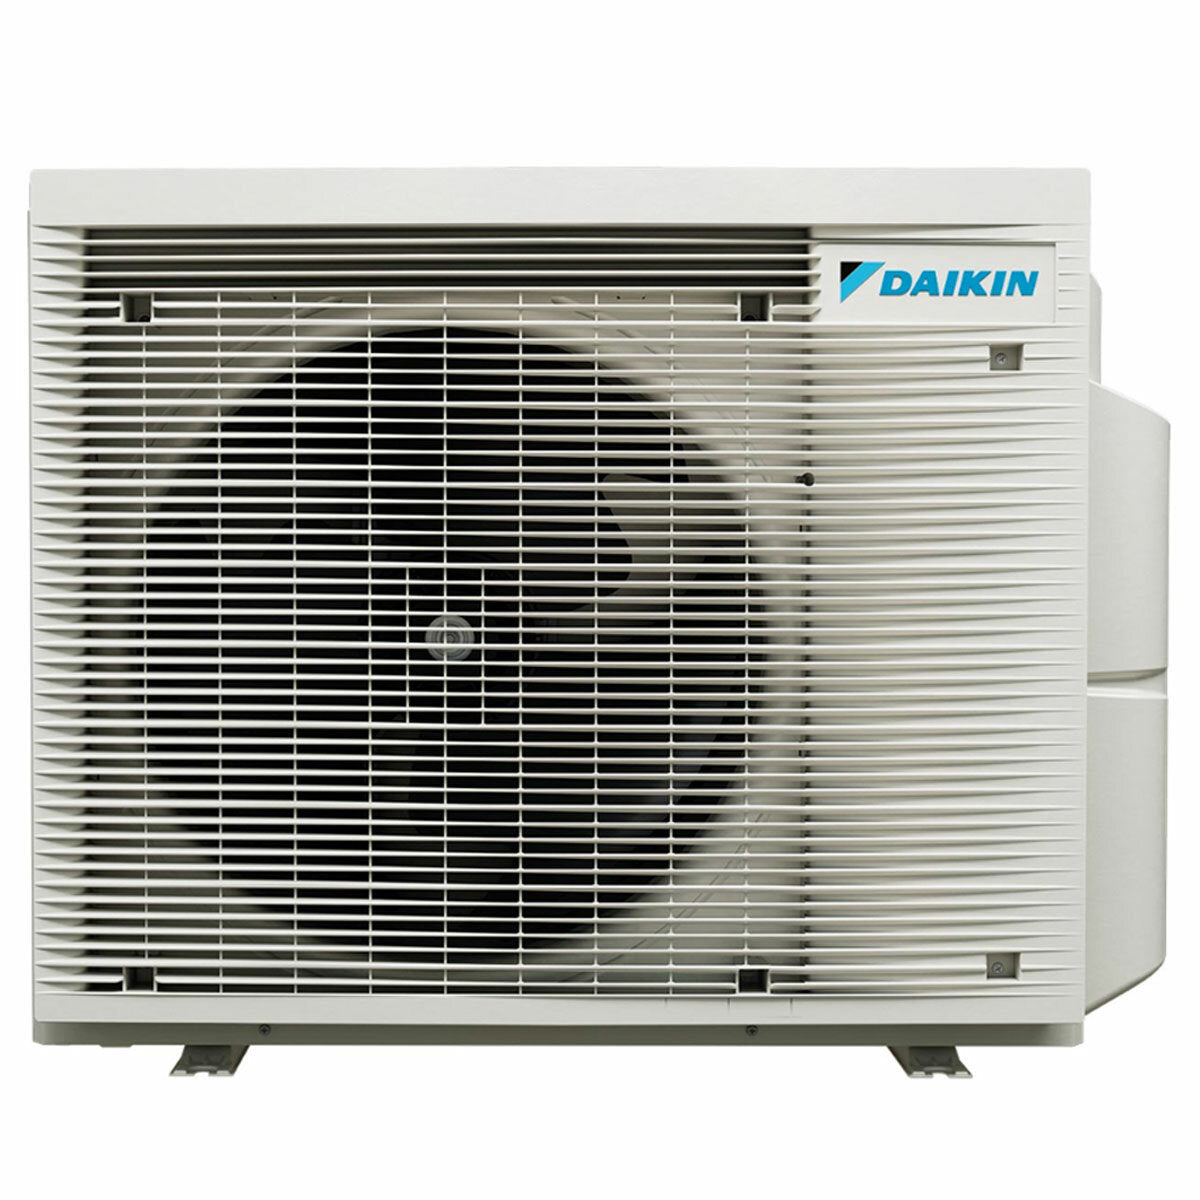 Daikin Mini Sky FDXM-F9 ducted air conditioner penta split 9000+9000+9000+9000+18000 BTU inverter A++ external 9 kW